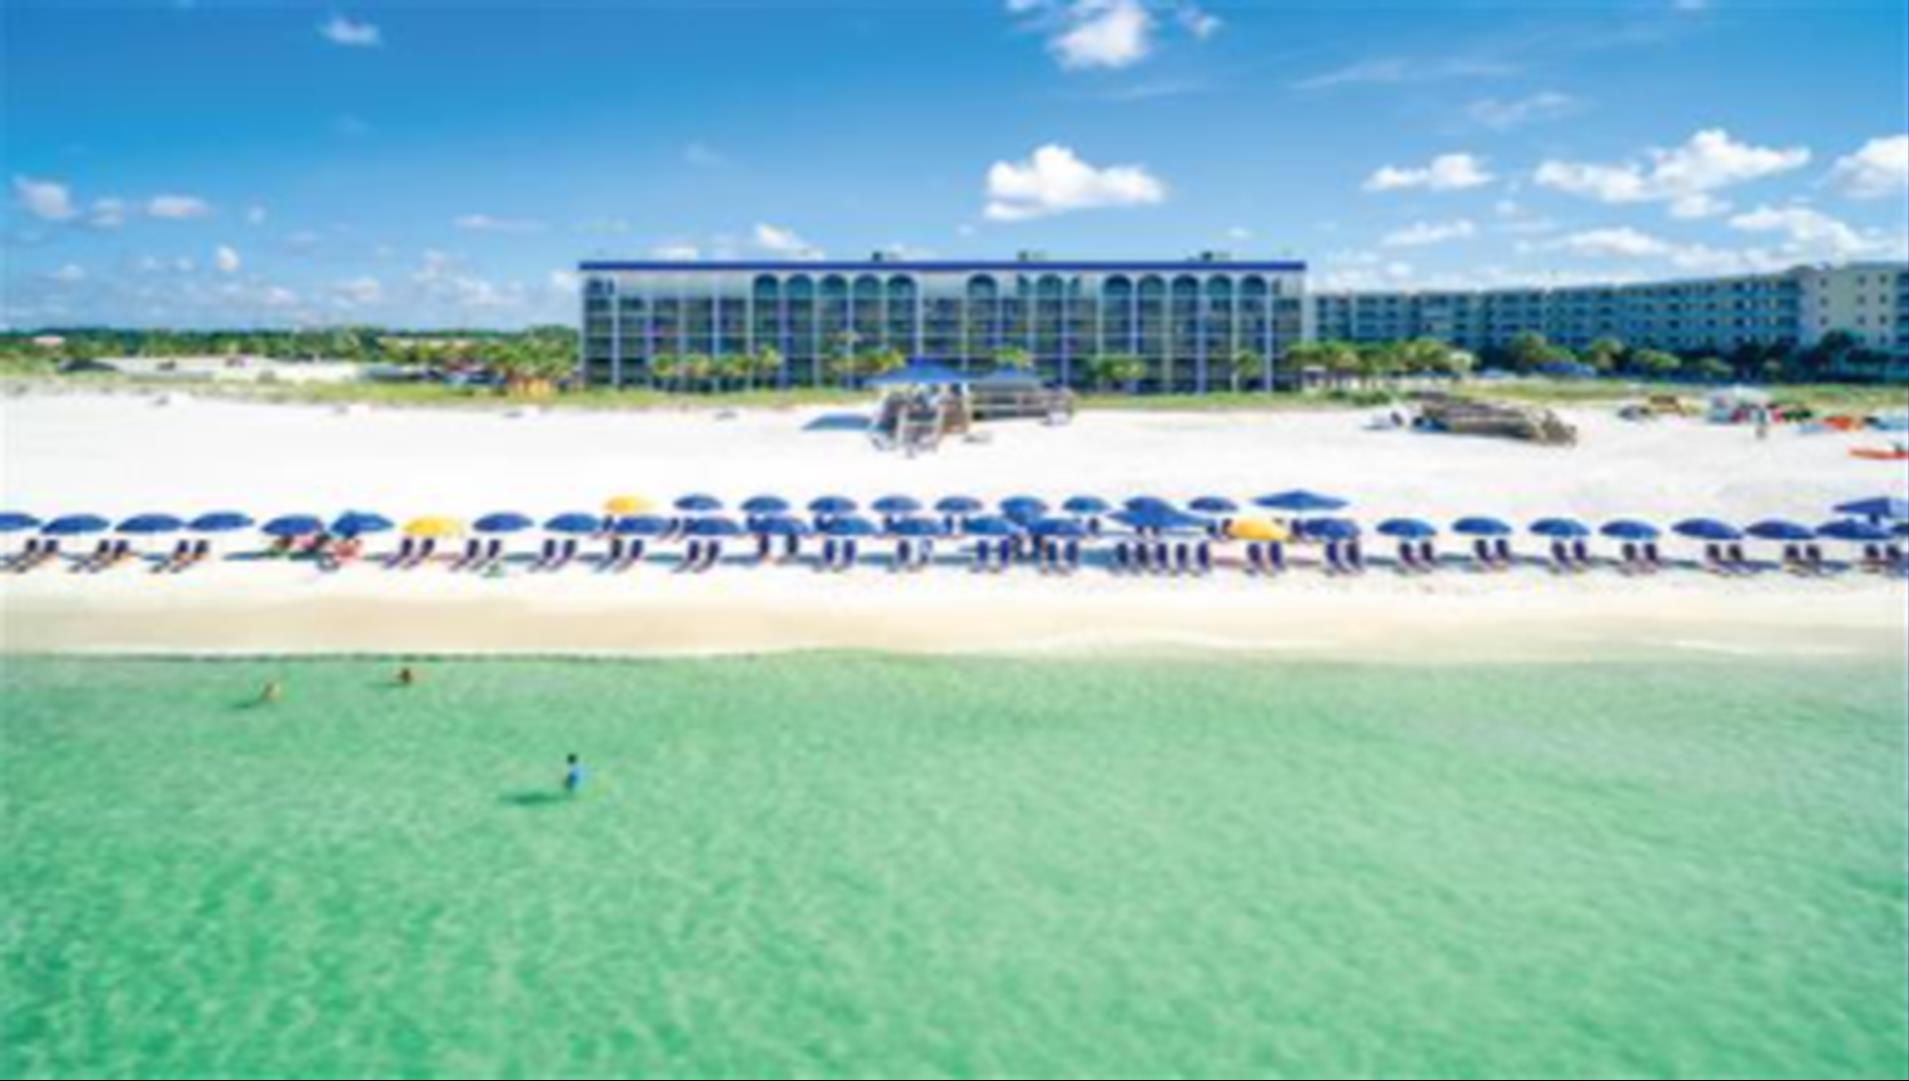 The Island Resort in Fort Walton Beach, FL